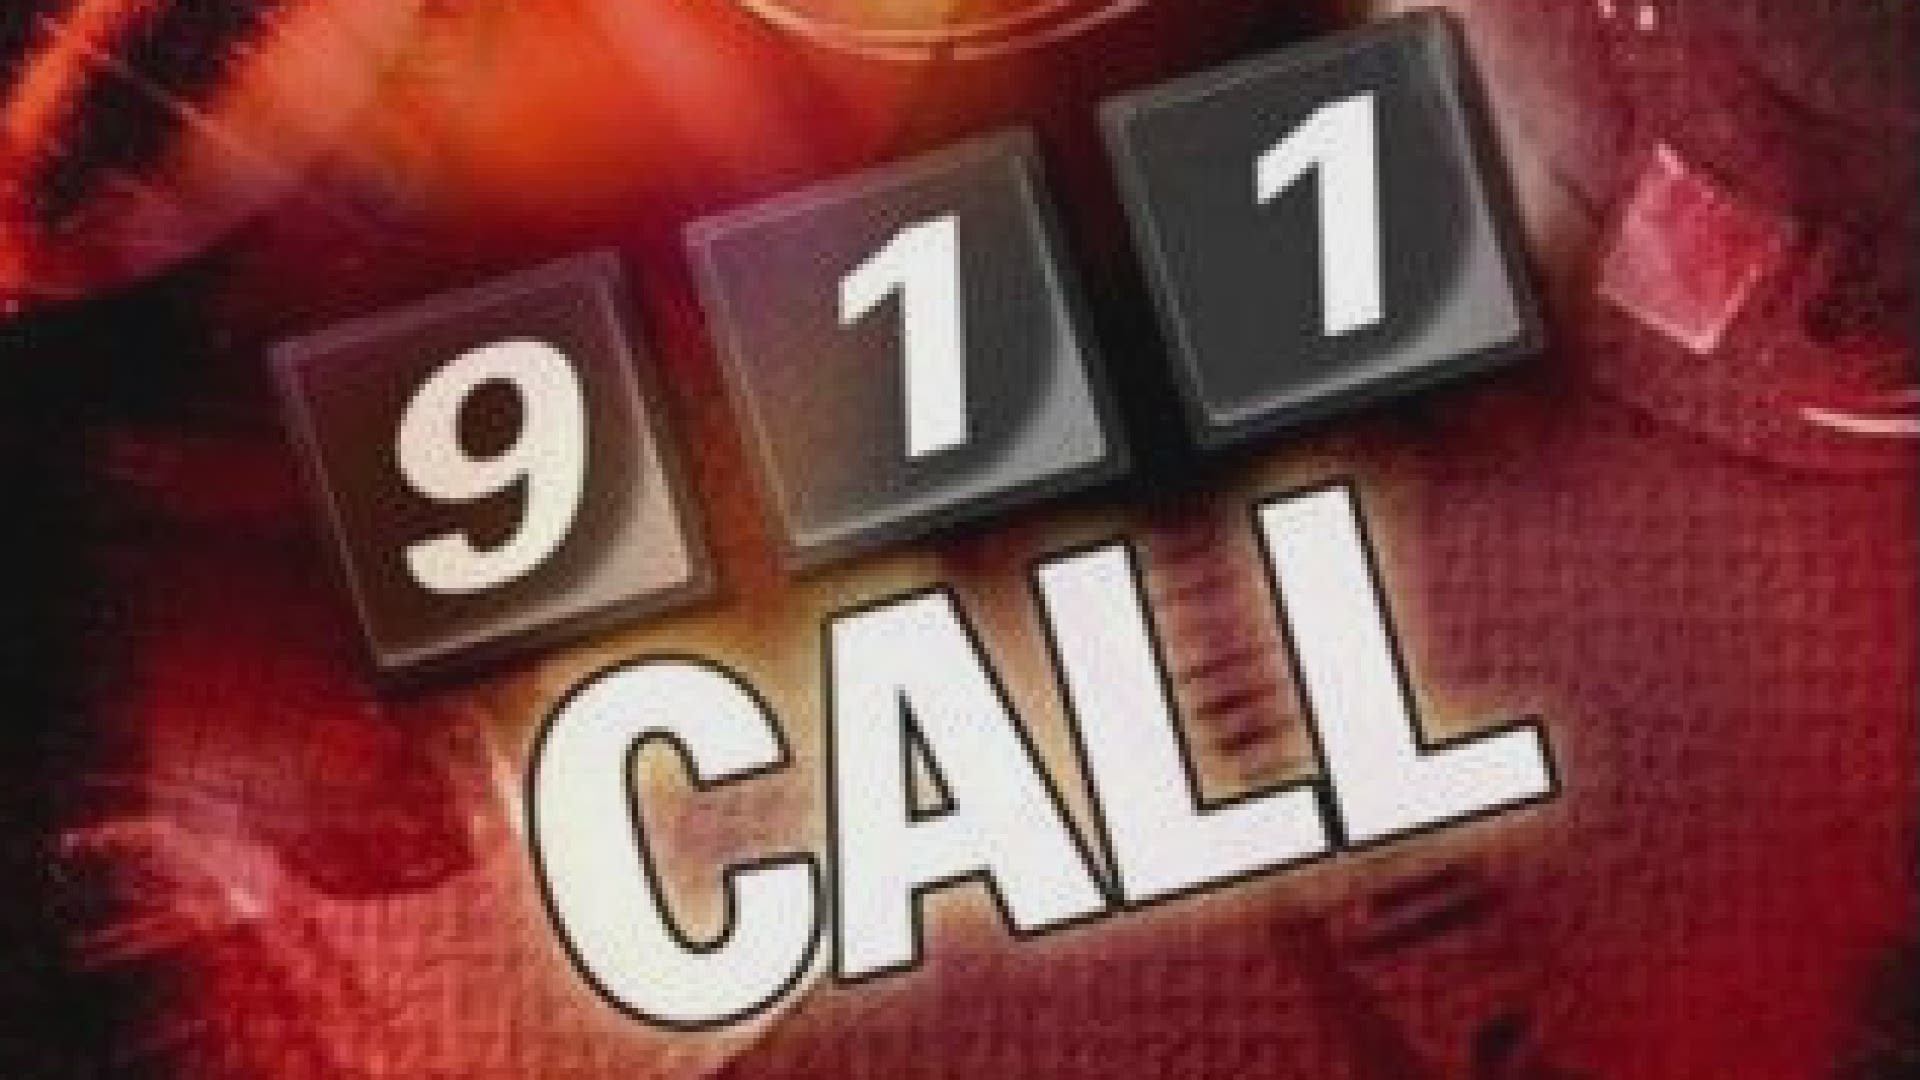 911 AUDIO ' Akron child dies after being found in cold